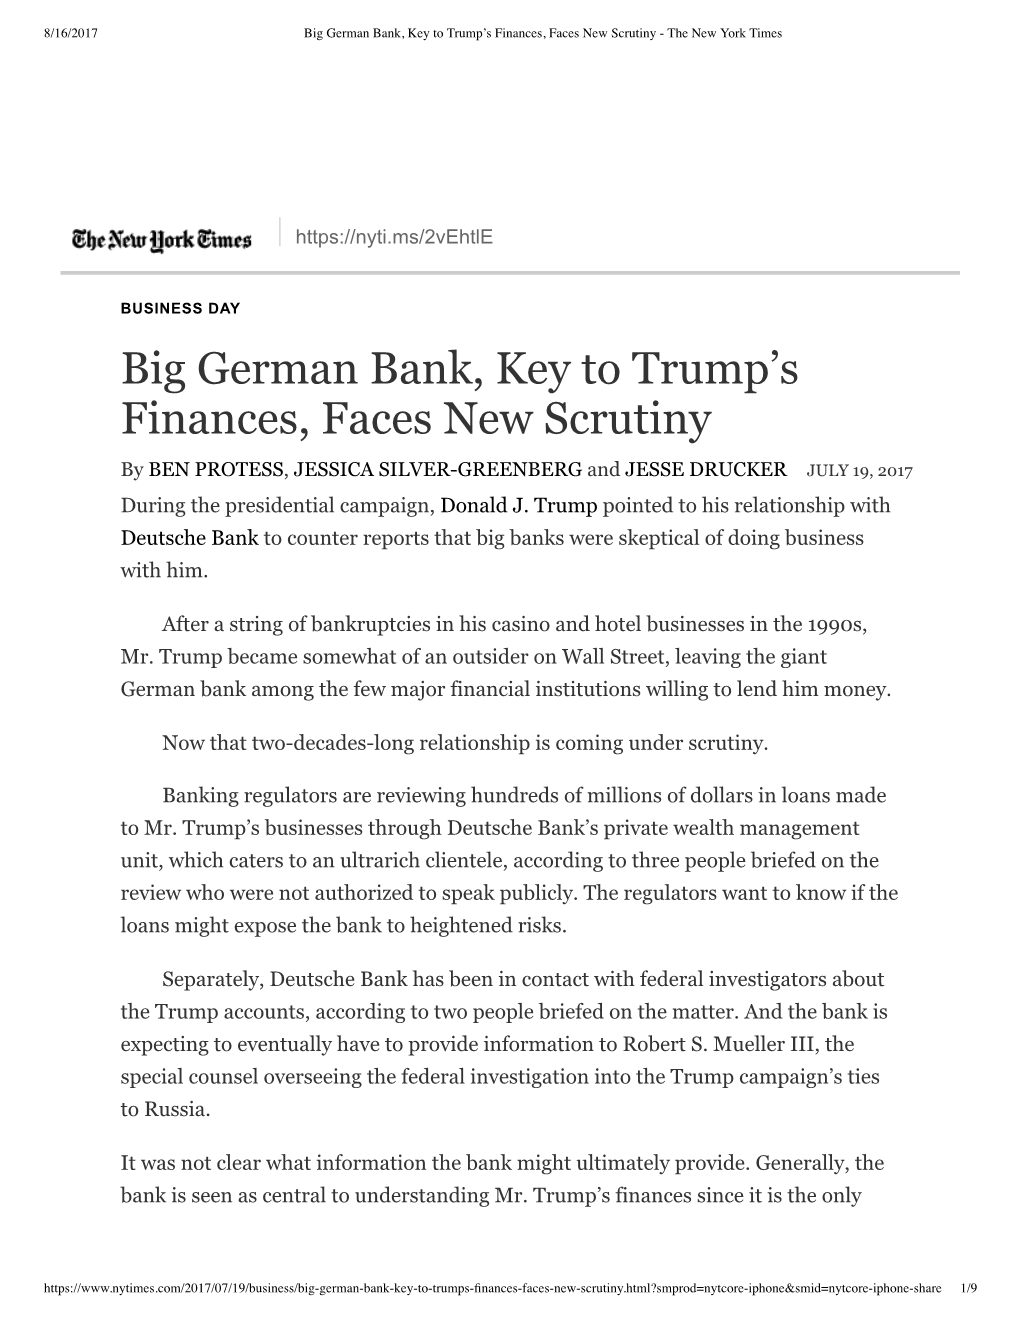 Big German Bank, Key to Trump's Finances, Faces New Scrutiny